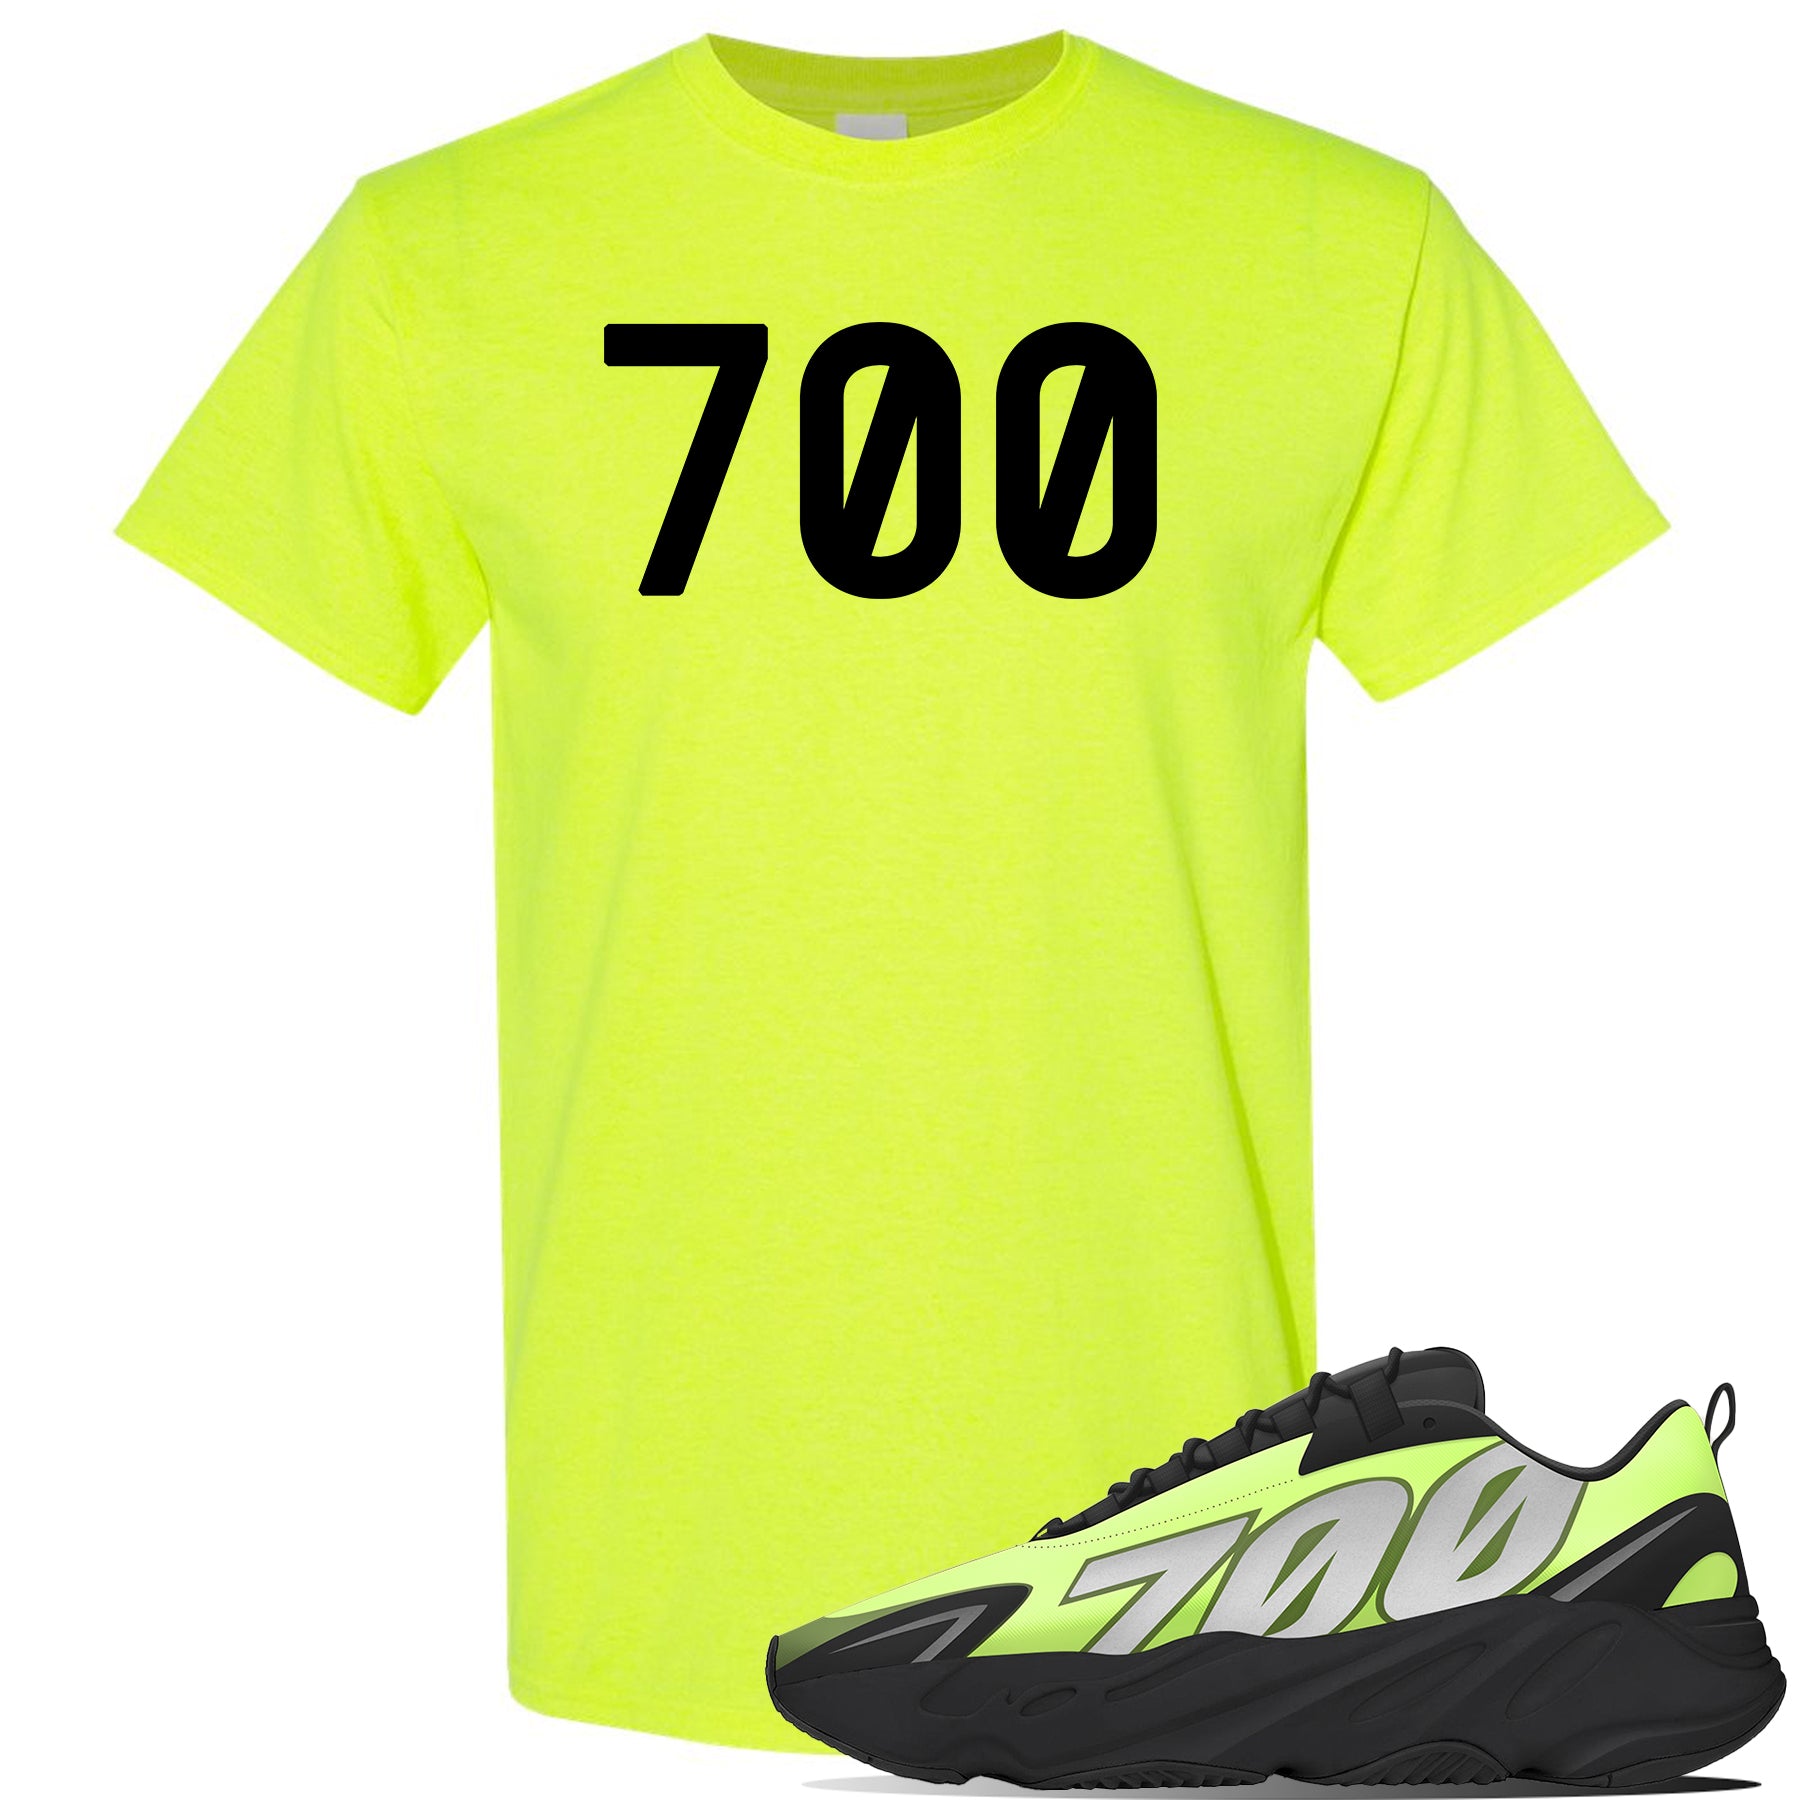 yeezy 700 shirt